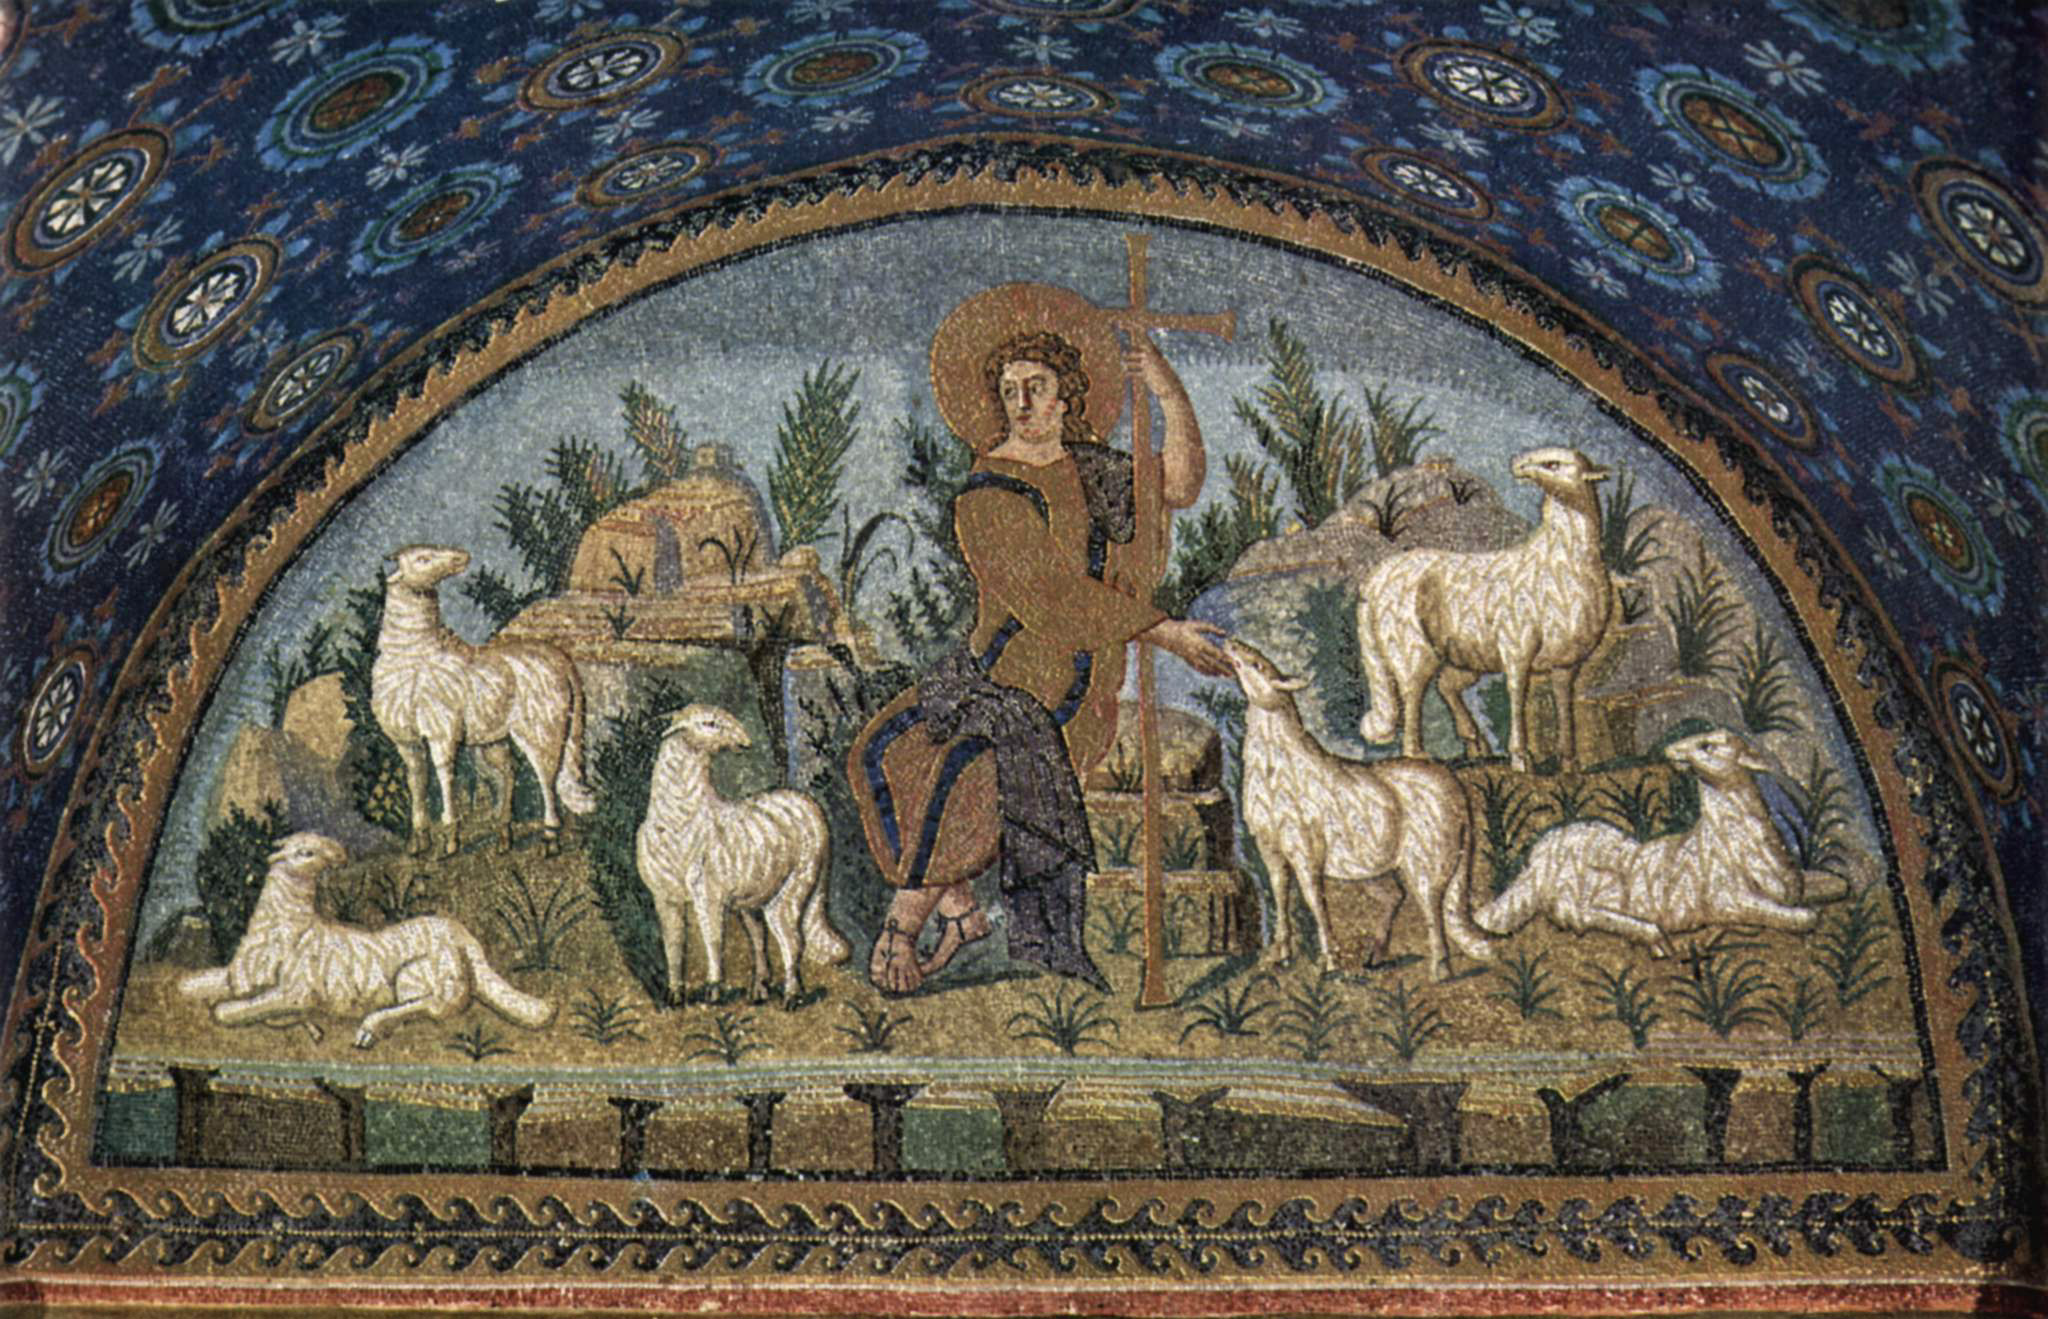 Christ the Good Shepherd, from Art in the Christian Tradition, a project of the Vanderbilt Divinity Library, Nashville, TN. http://diglib.library.vanderbilt.edu/act-imagelink.pl?RC=51106 (retrieved December 25, 2012).